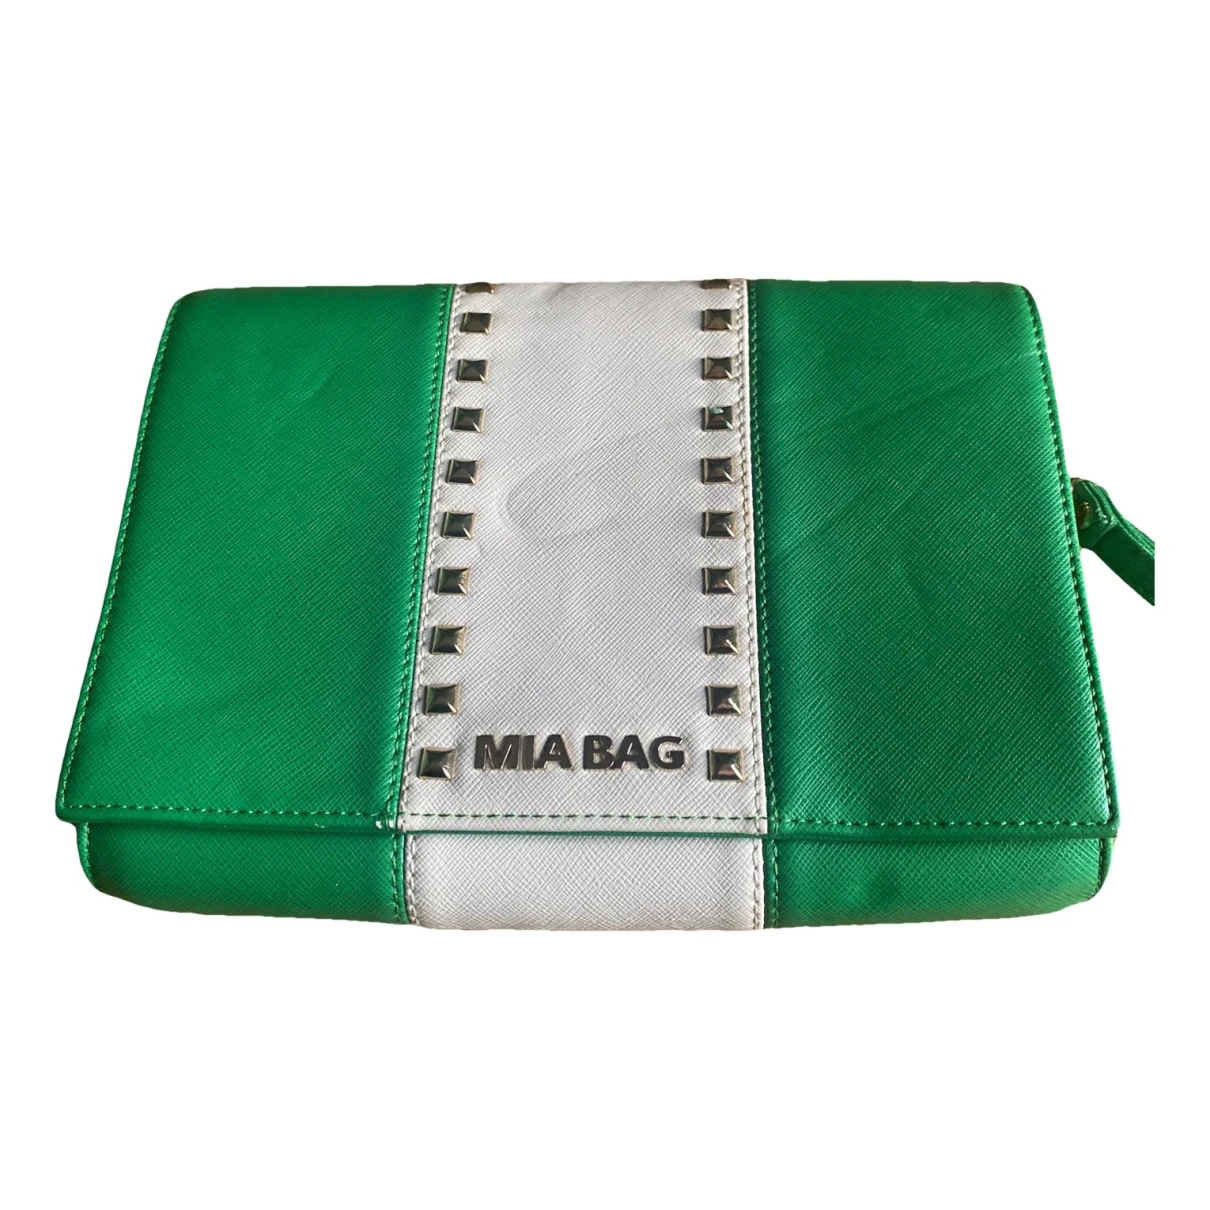 Pre-owned Mia Bag Vegan Leather Clutch Bag In Green